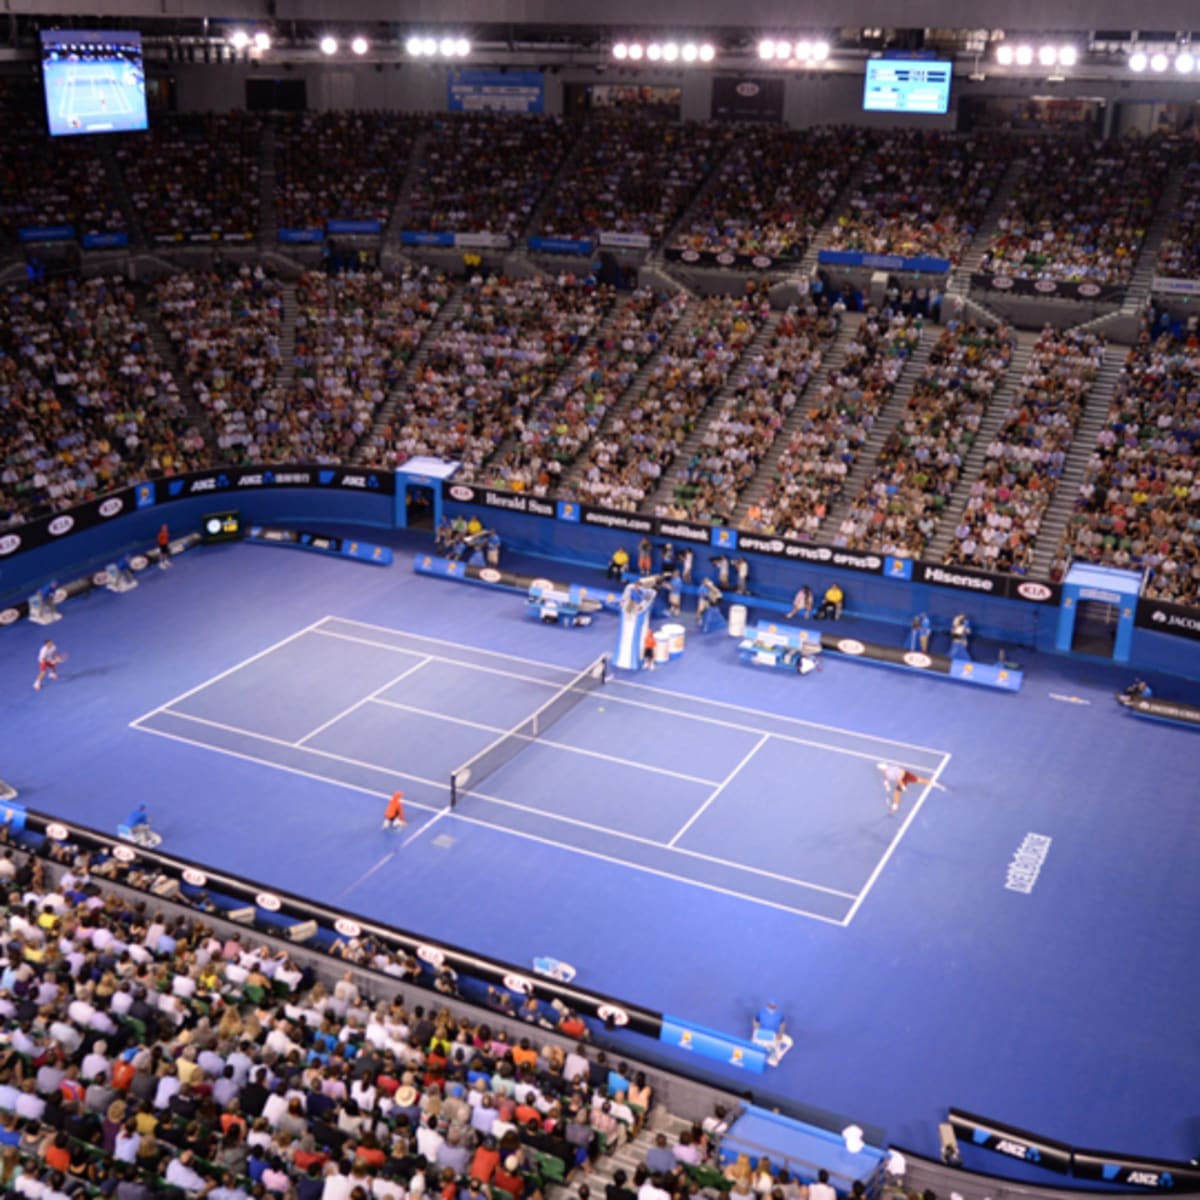 2015 Australian Open: Live stream, schedule, dates - Sports Illustrated